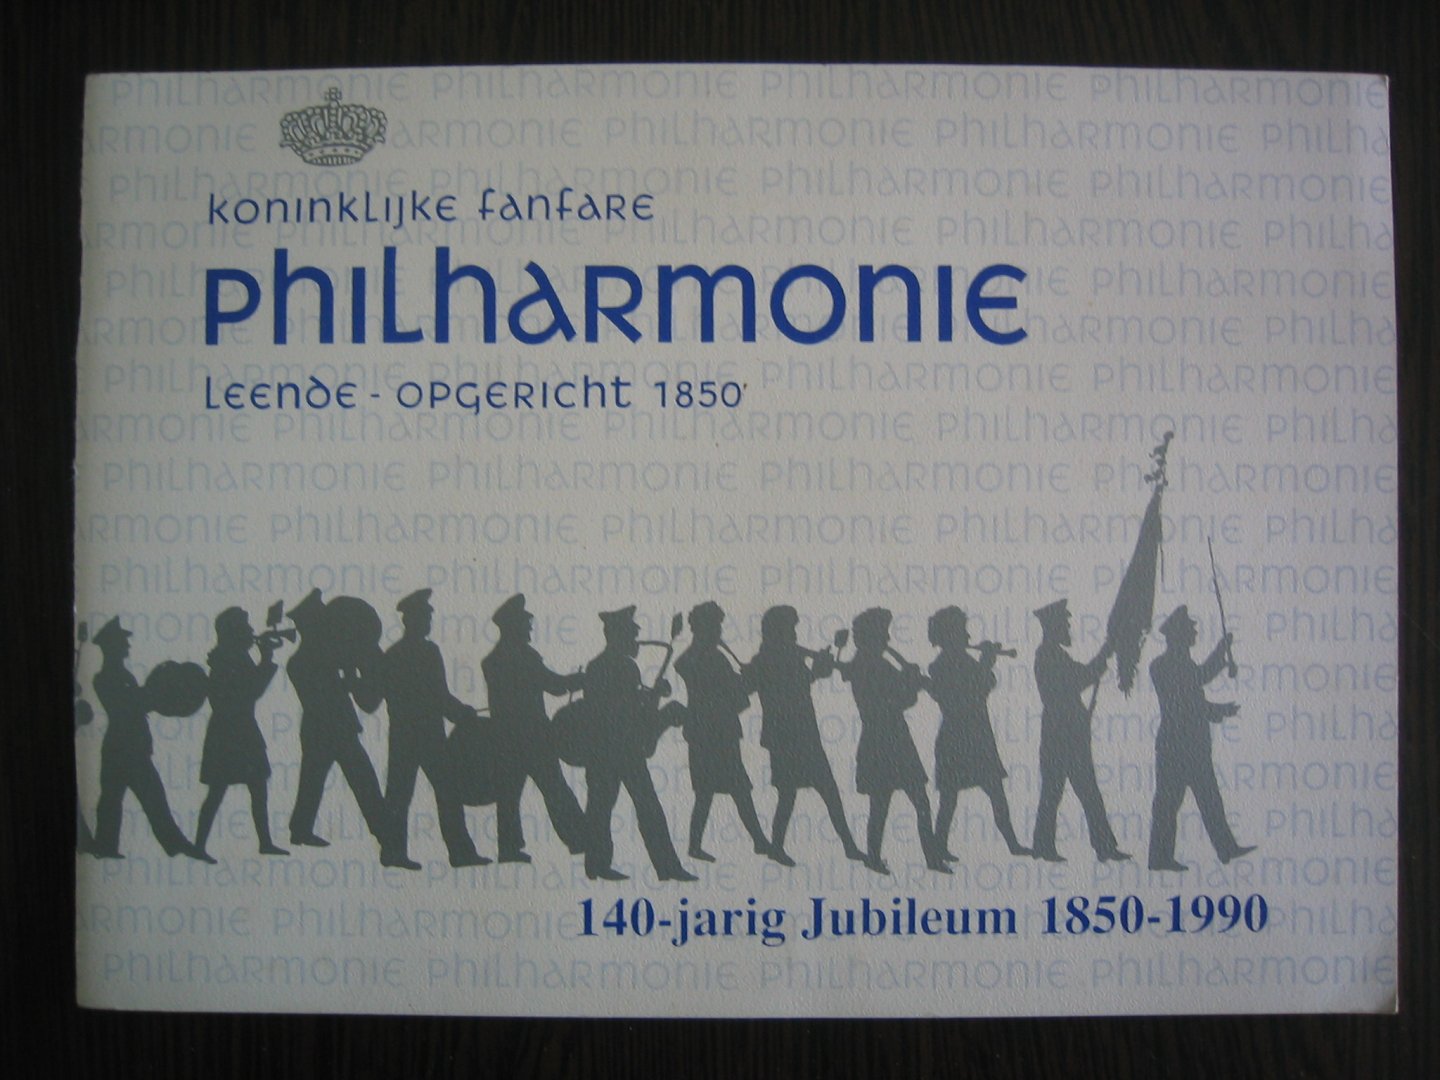 Asten, harrie van e.a. - Koninklijke Fanfare Philharmonie Leende - opgericht 1850. 140-jarig Jubileum 1850-1990.